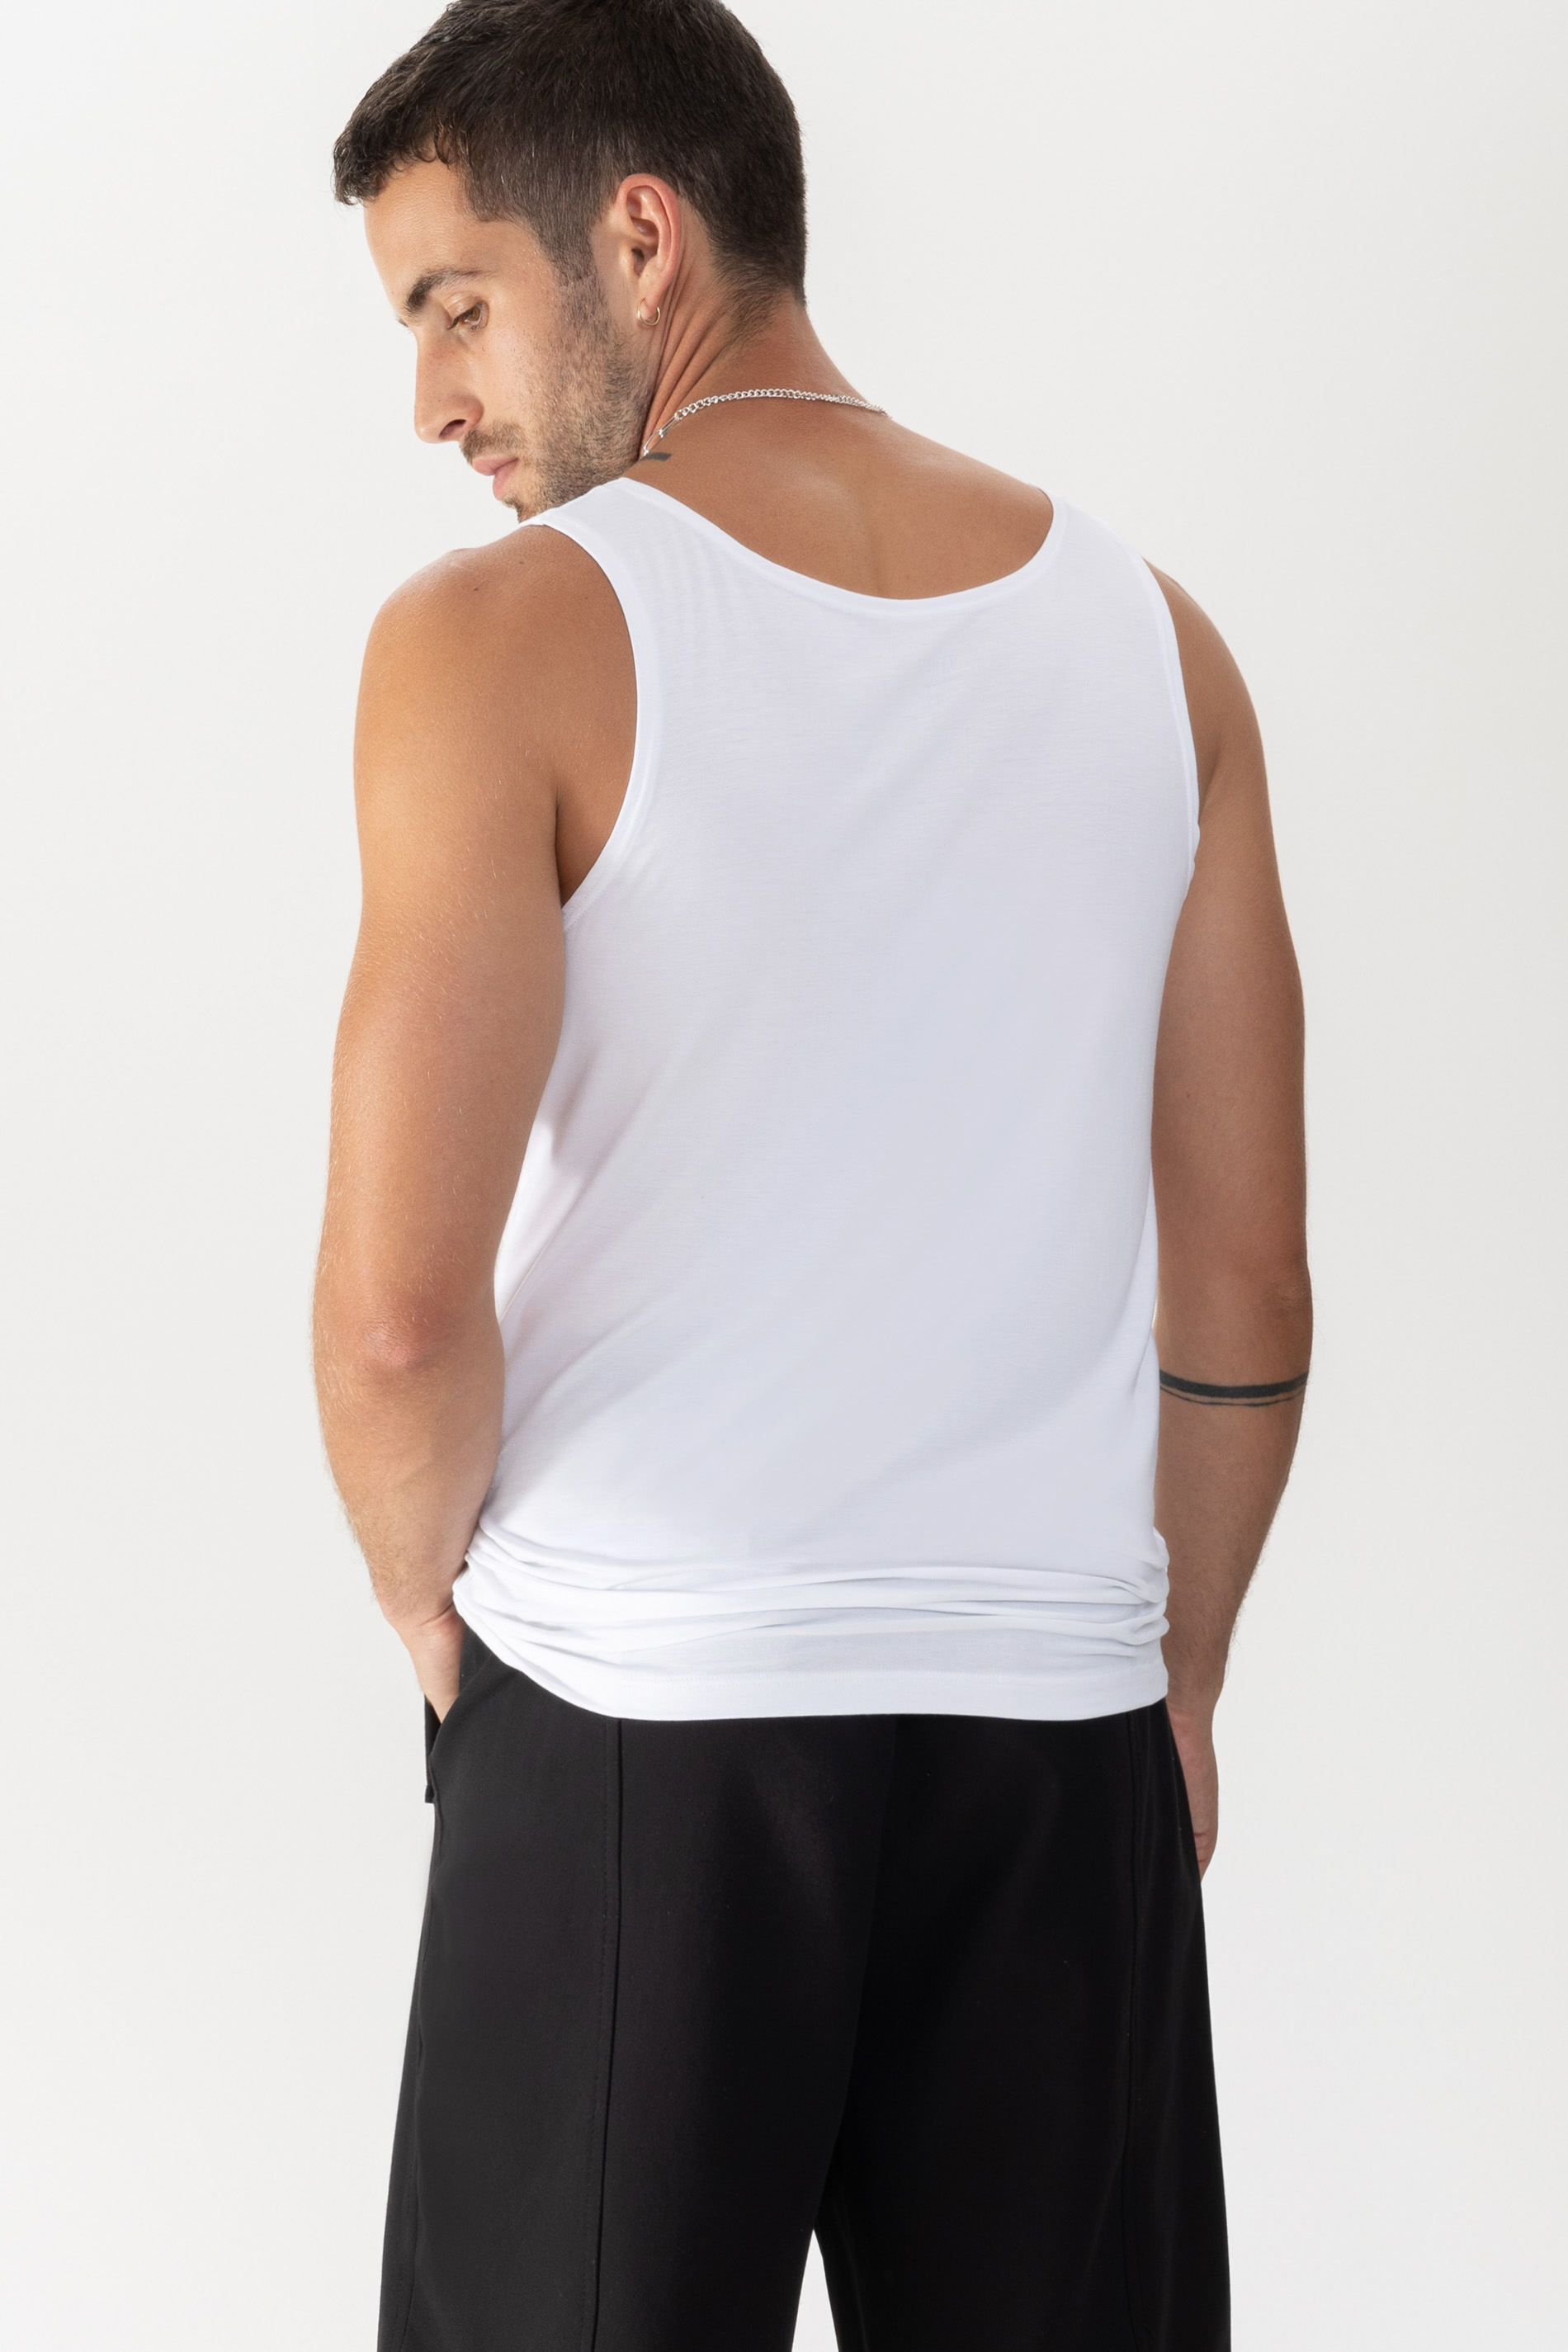 Athletic shirt White Serie Superior Modal Rear View | mey®